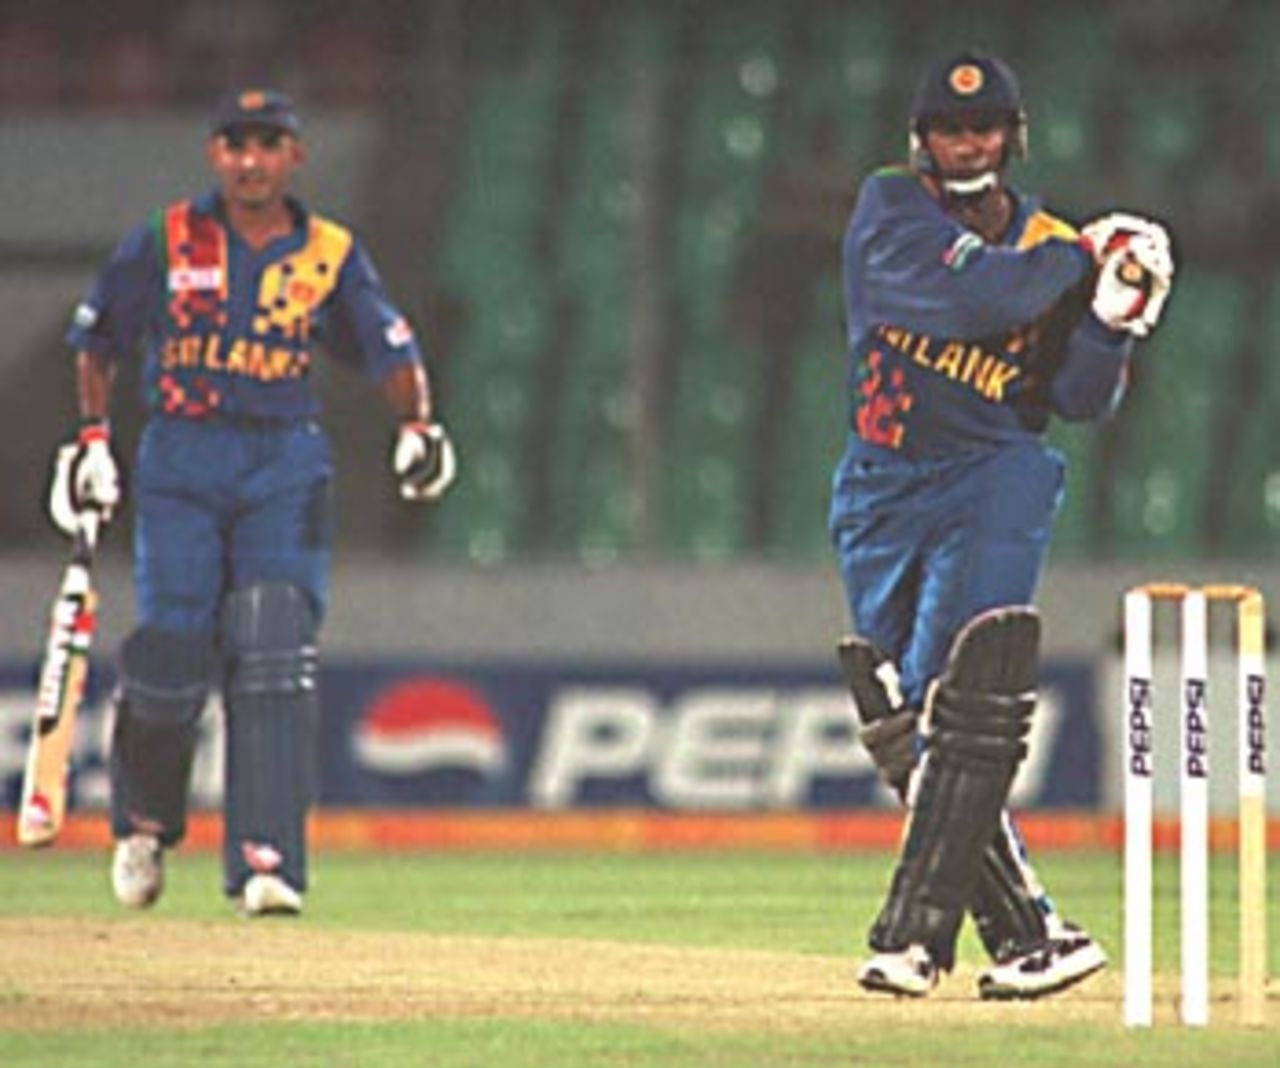 Aravinda de Silva smashing the ball through fine leg while his partner Atapattu watching on, Asia Cup 1999/00, Bangladesh v Sri Lanka, Bangabandhu National Stadium, Dhaka 29 May 2000